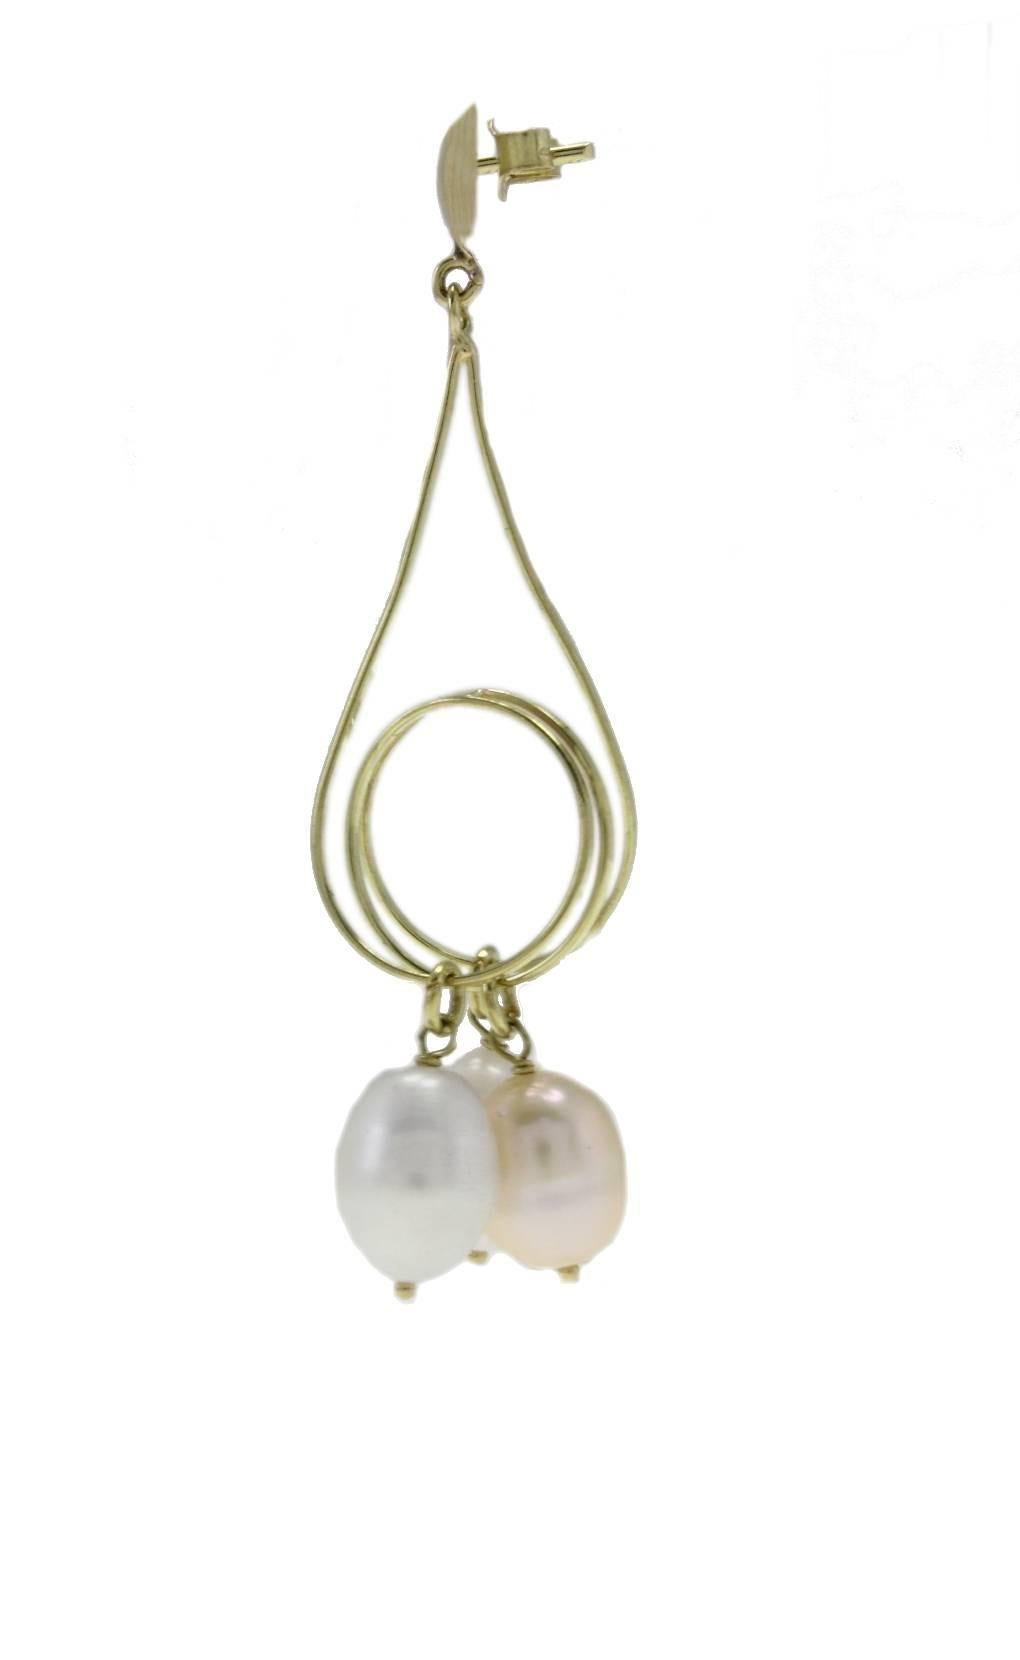 3 pearl drop earrings